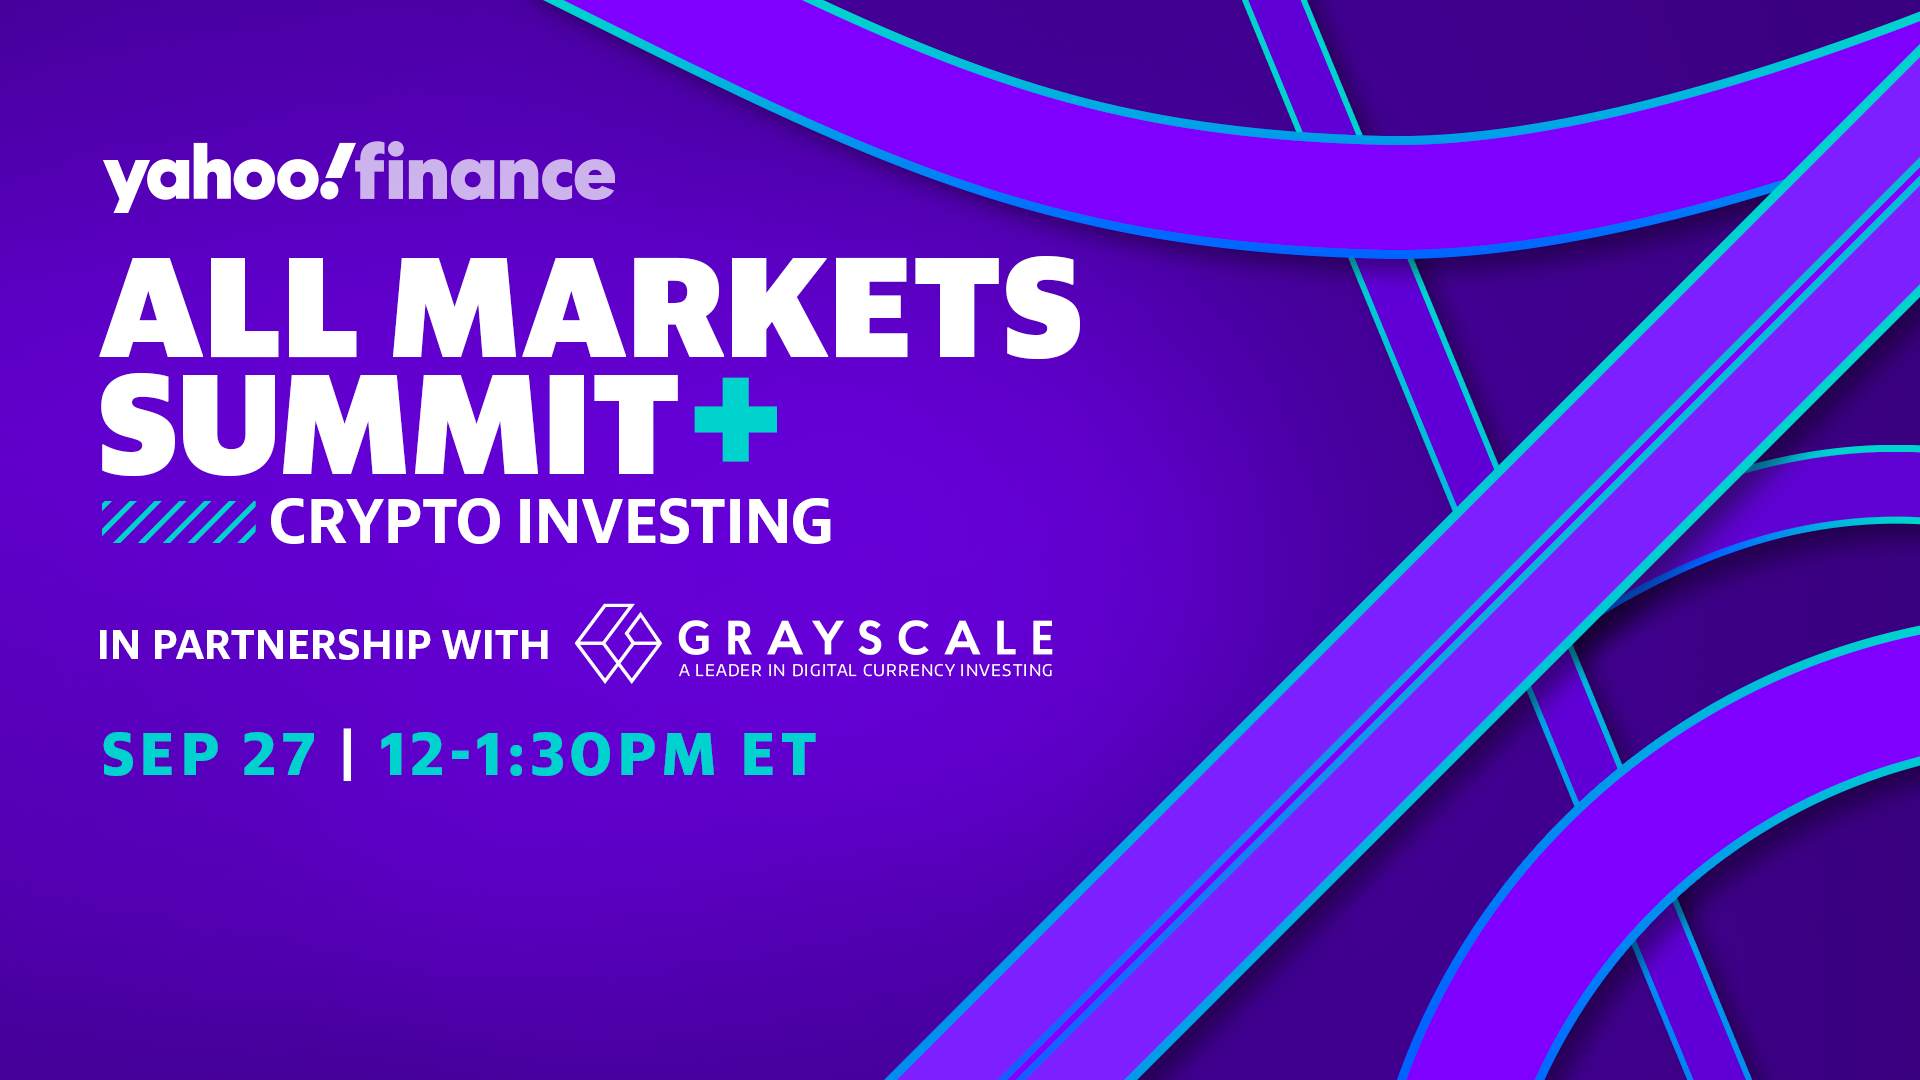 Yahoo Finance All Markets Summit Event Info & Highlights